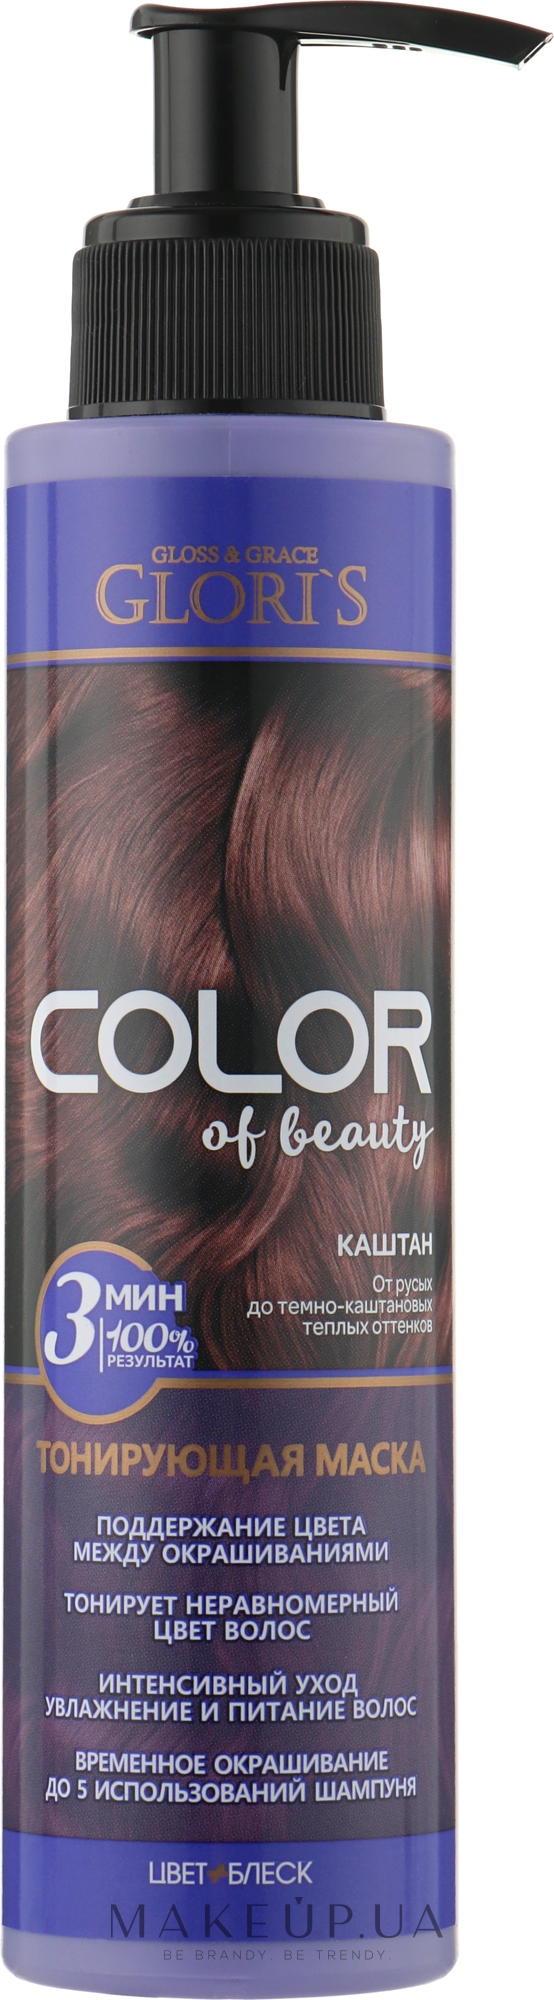 Тонирующая маска для волос - Glori's Color Of Beauty Hair Mask — фото Каштан